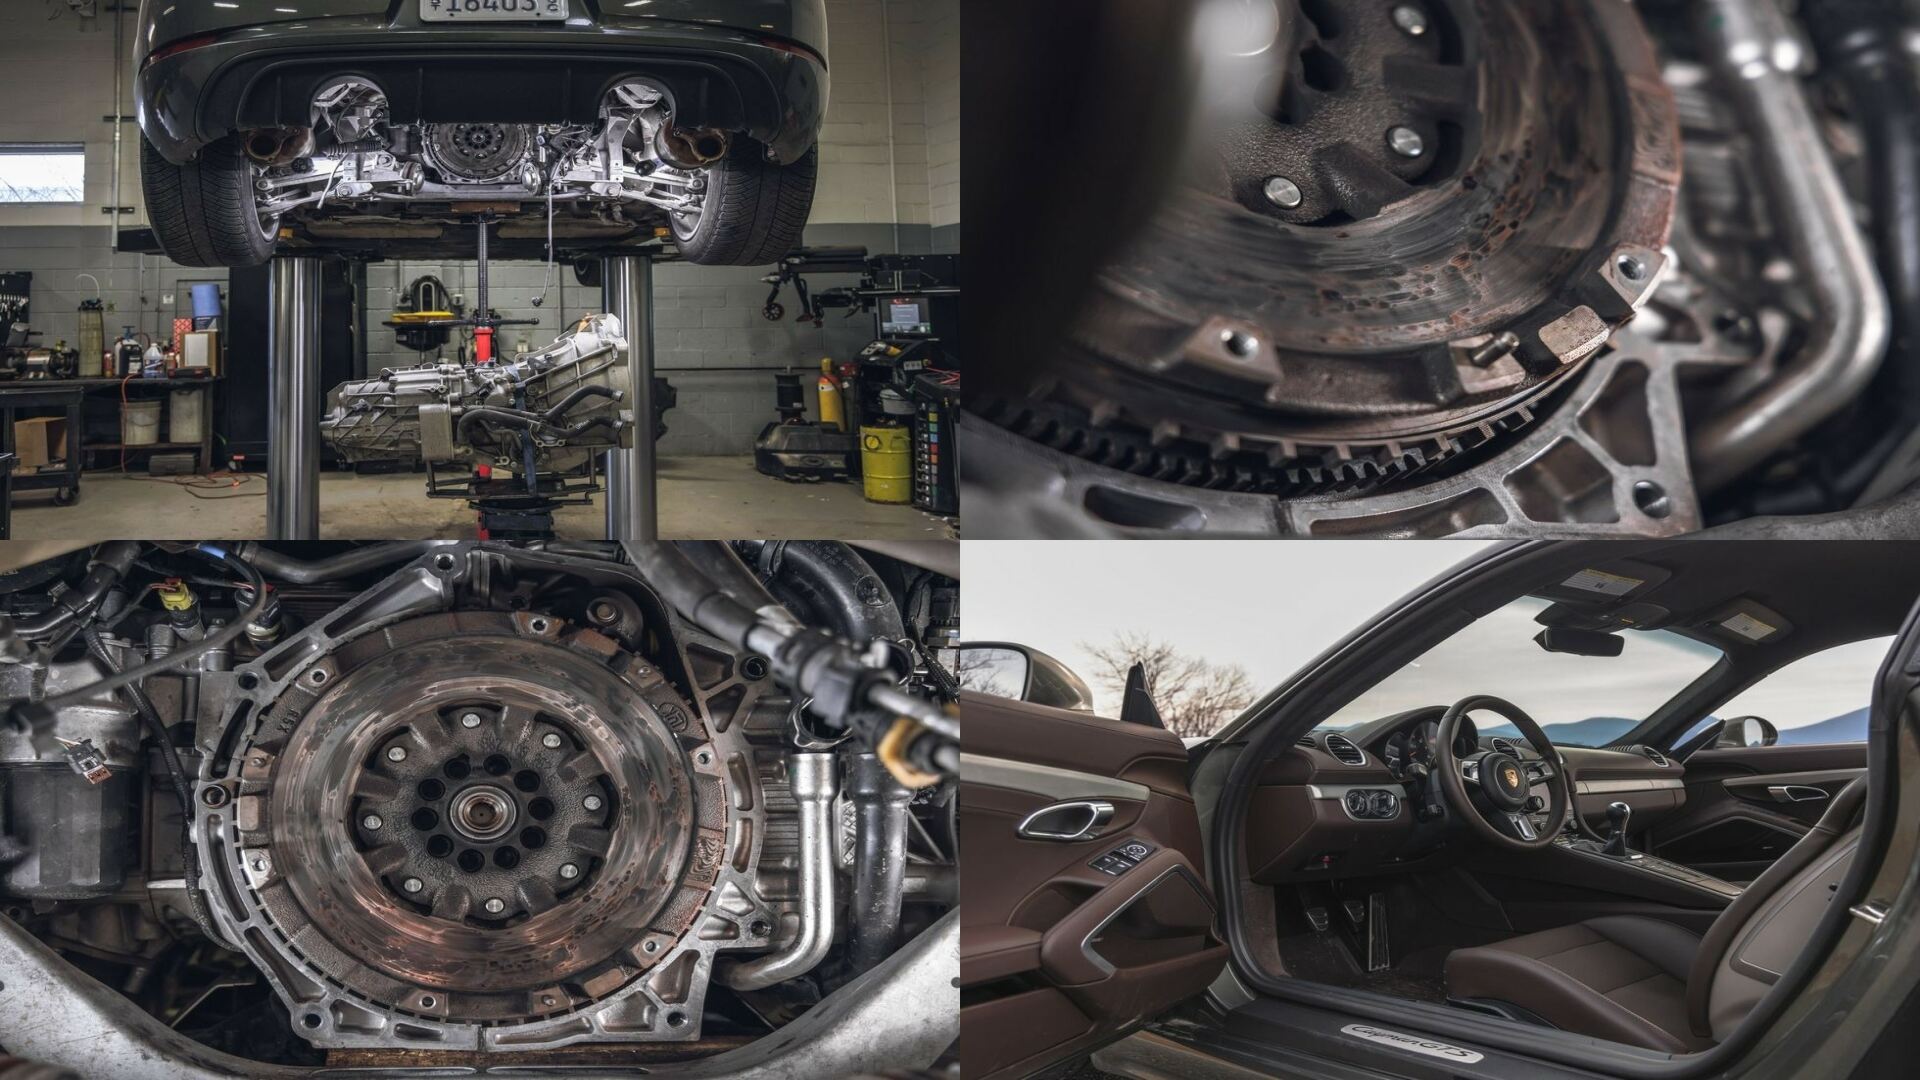 Porsche Cayman GTS 4.0 Interior And Engine (Credits Porche)